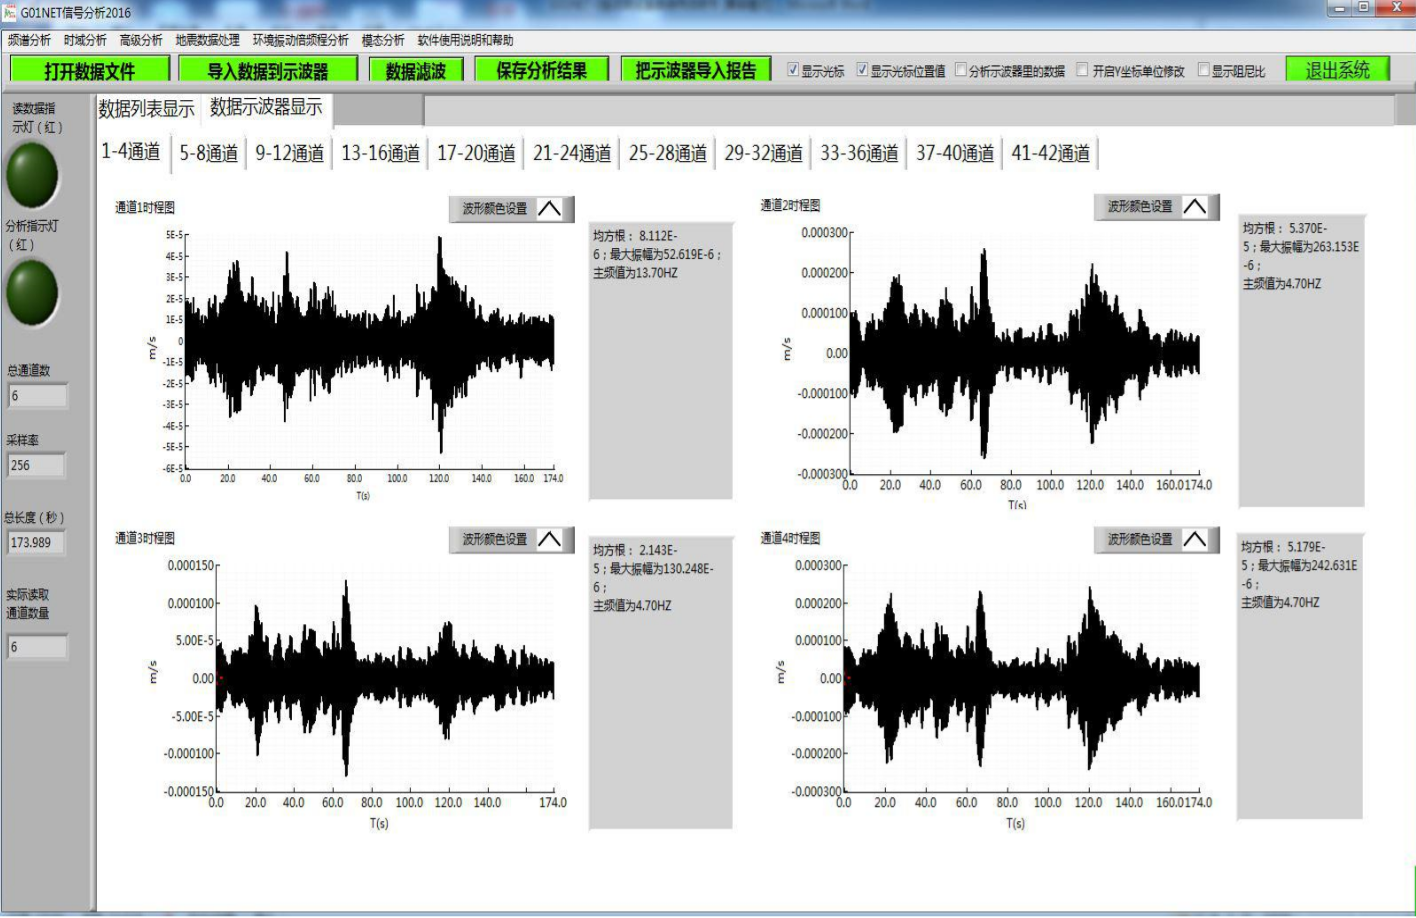 G01NET信号分析软件